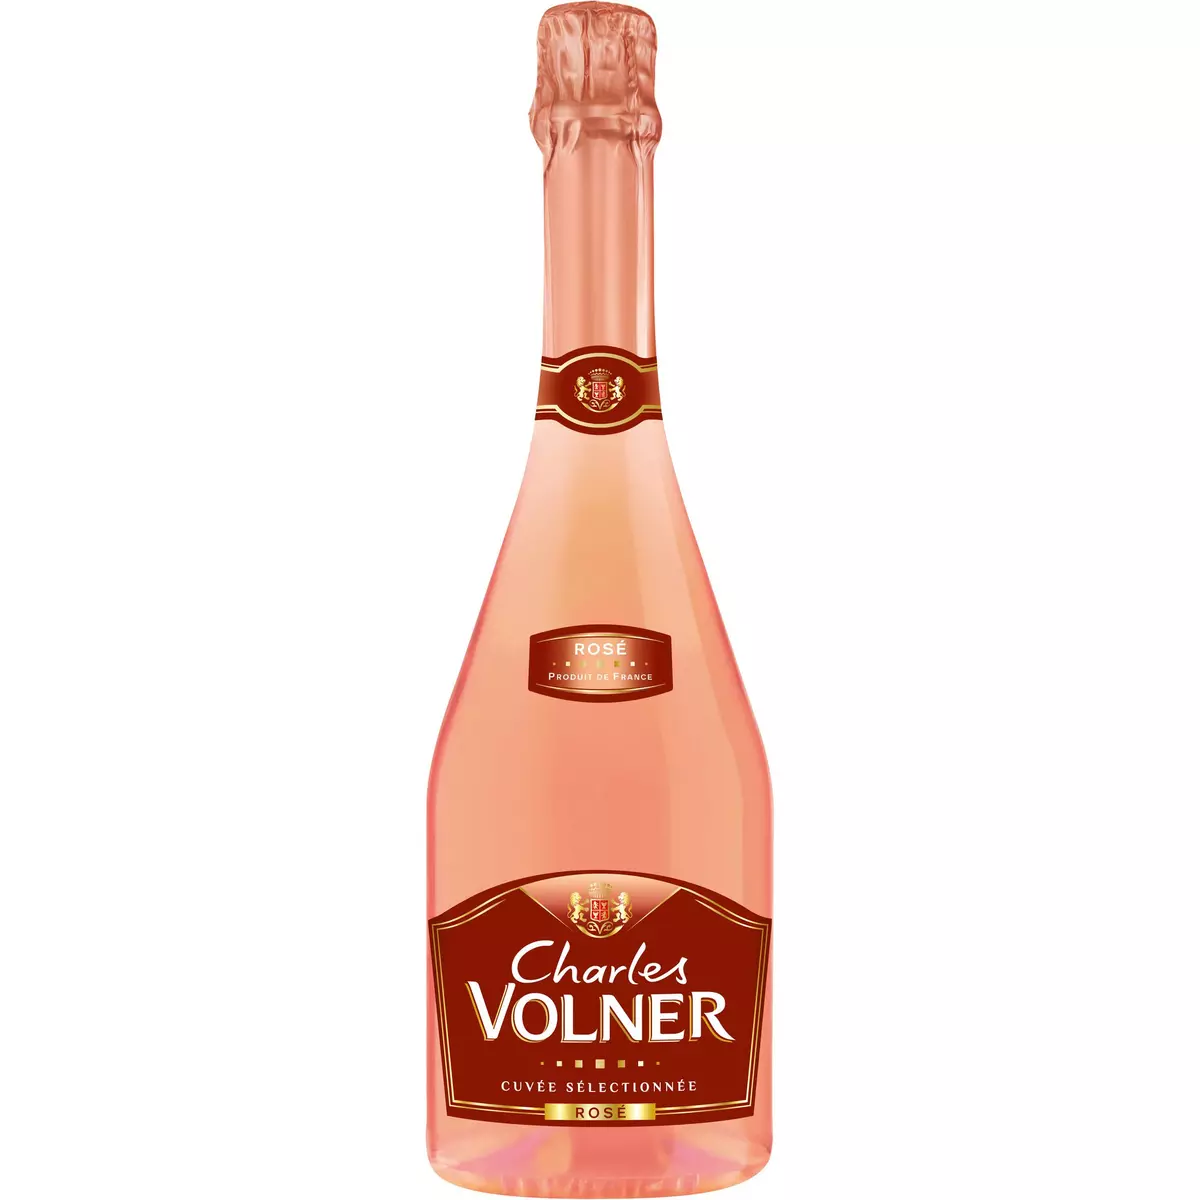 CHARLES VOLNER Vin effervescent cuvée sélectionnée rosé 75cl